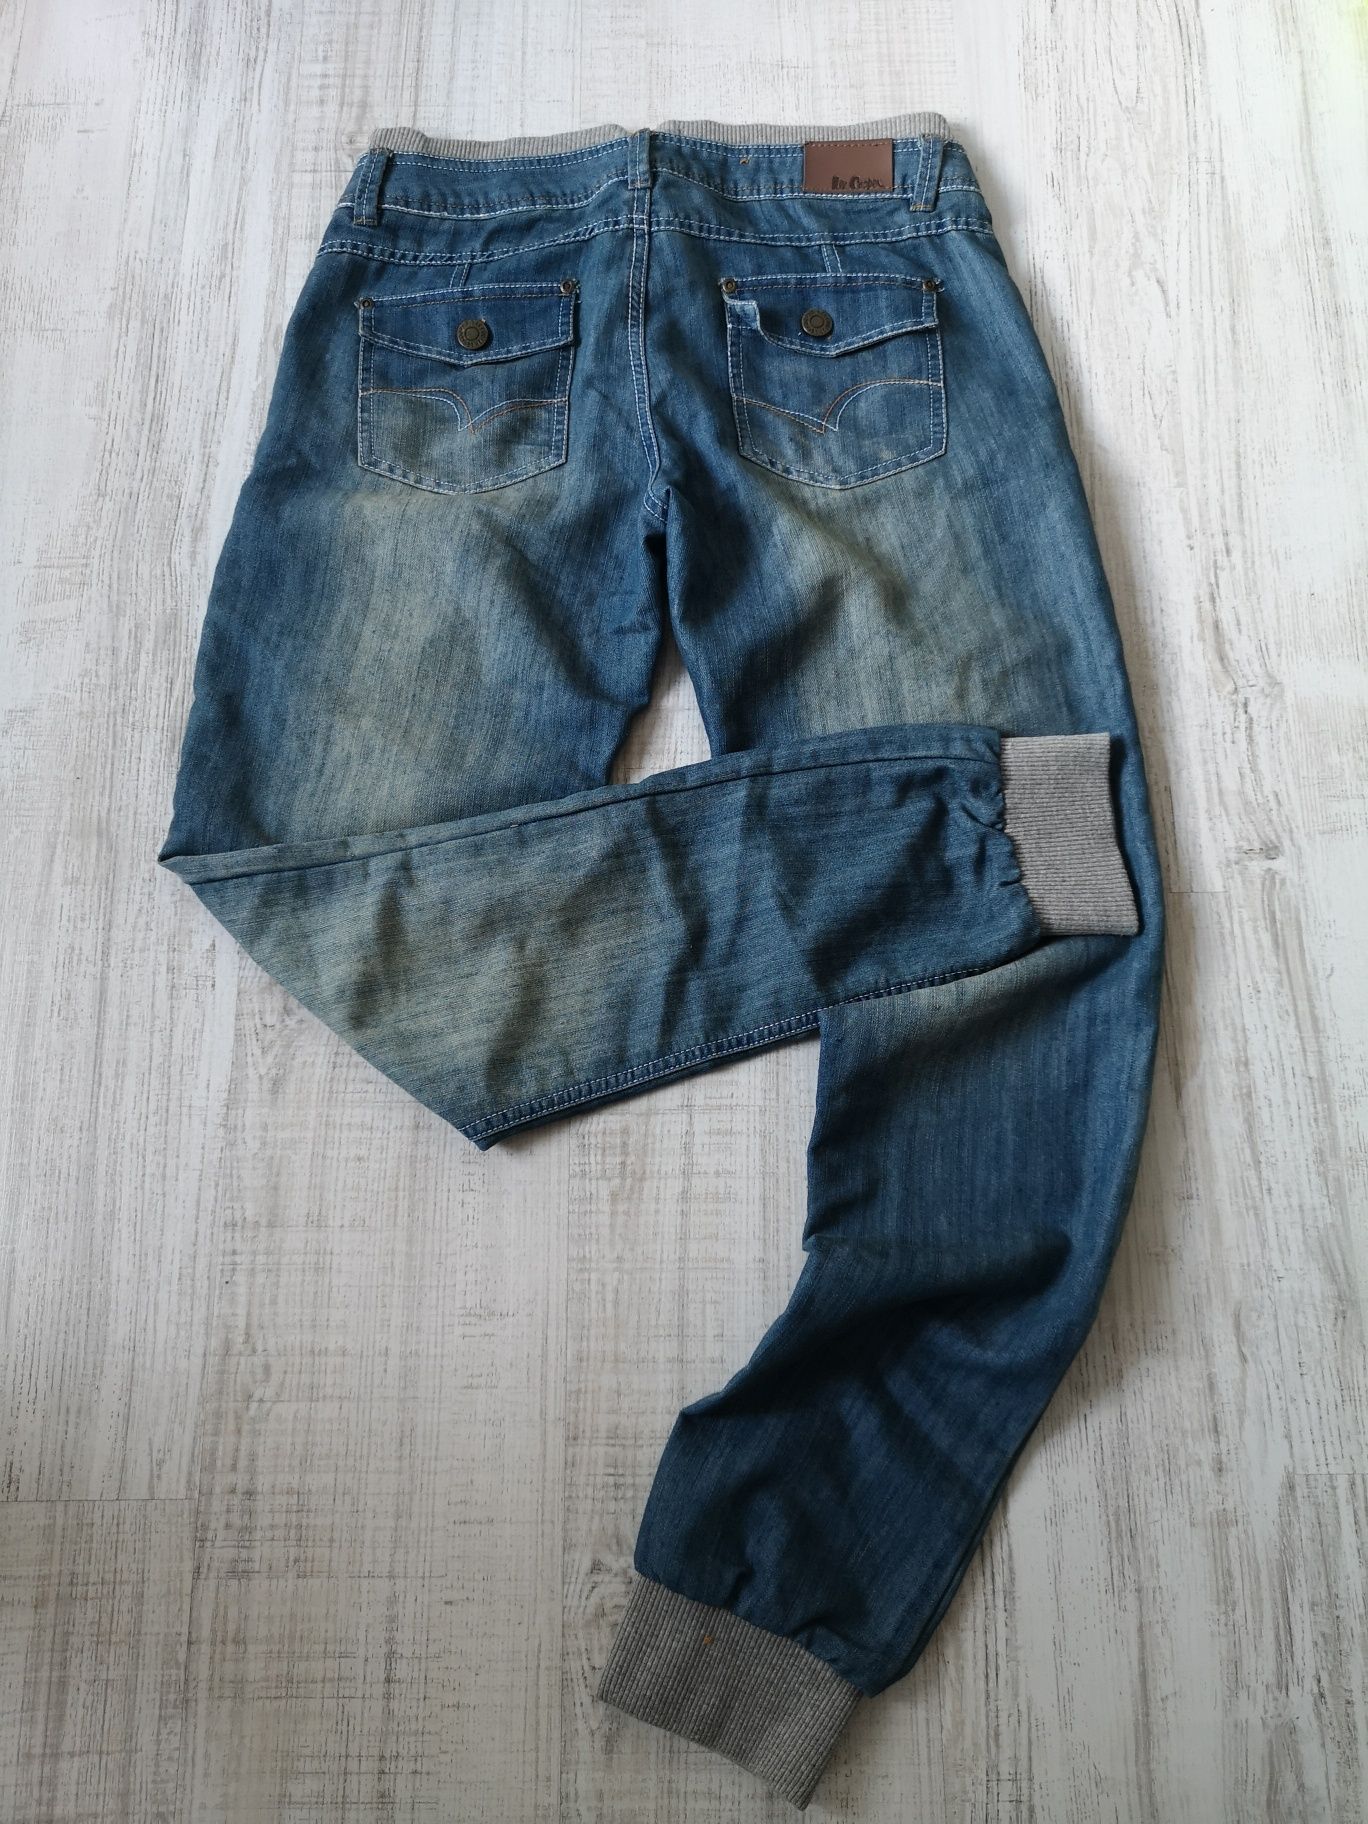 Spodnie / jeansy / boyfriend